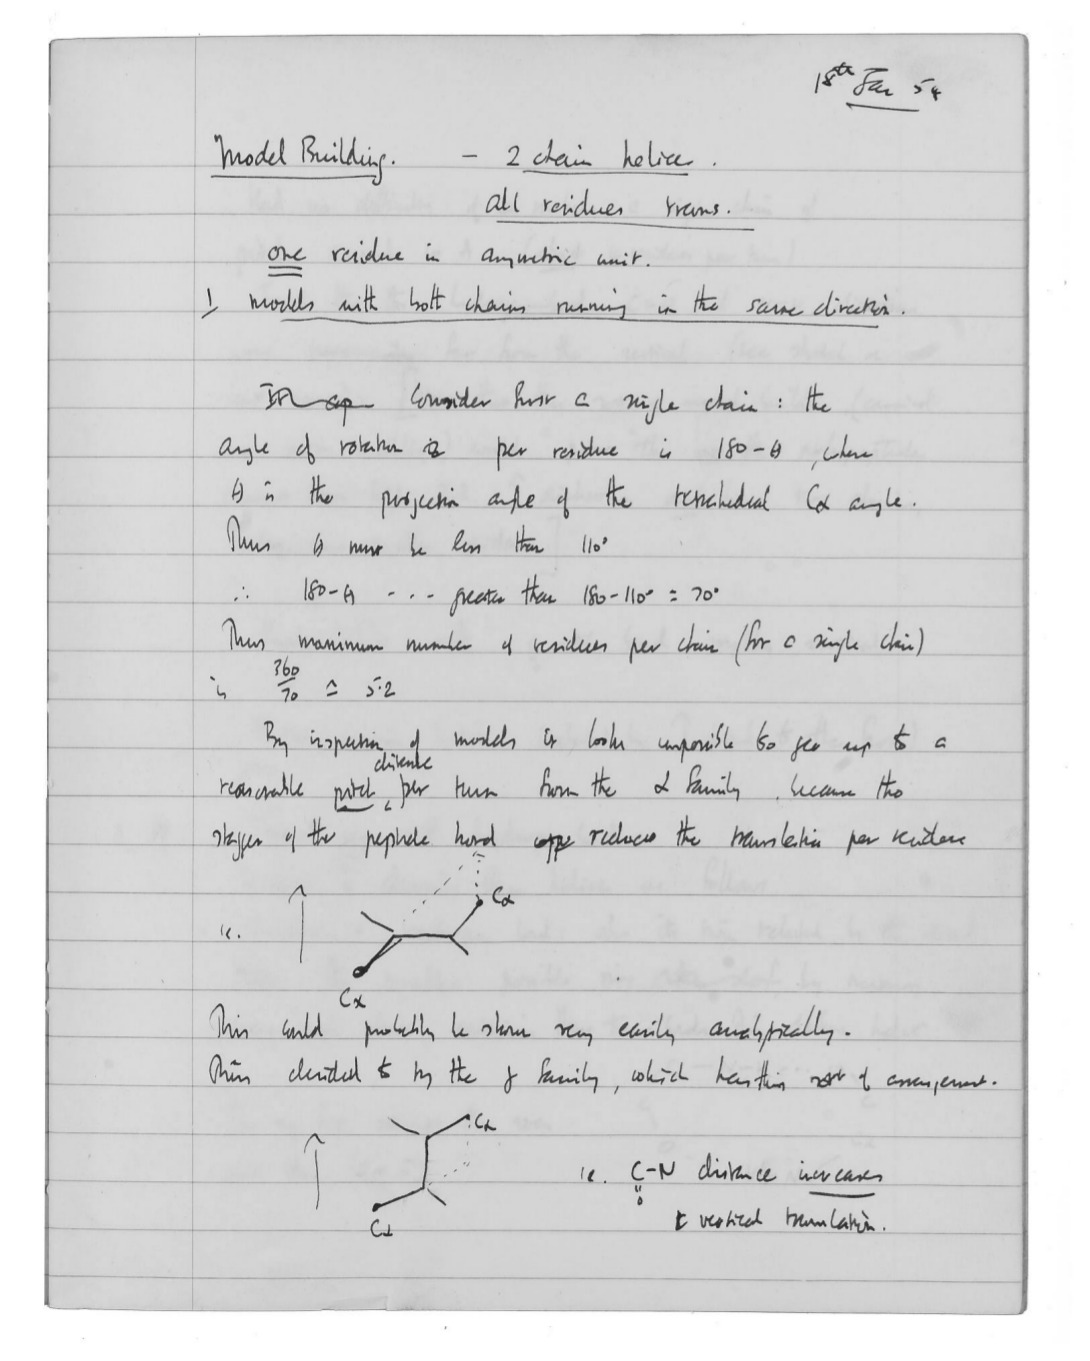 Francis Crick's notebook